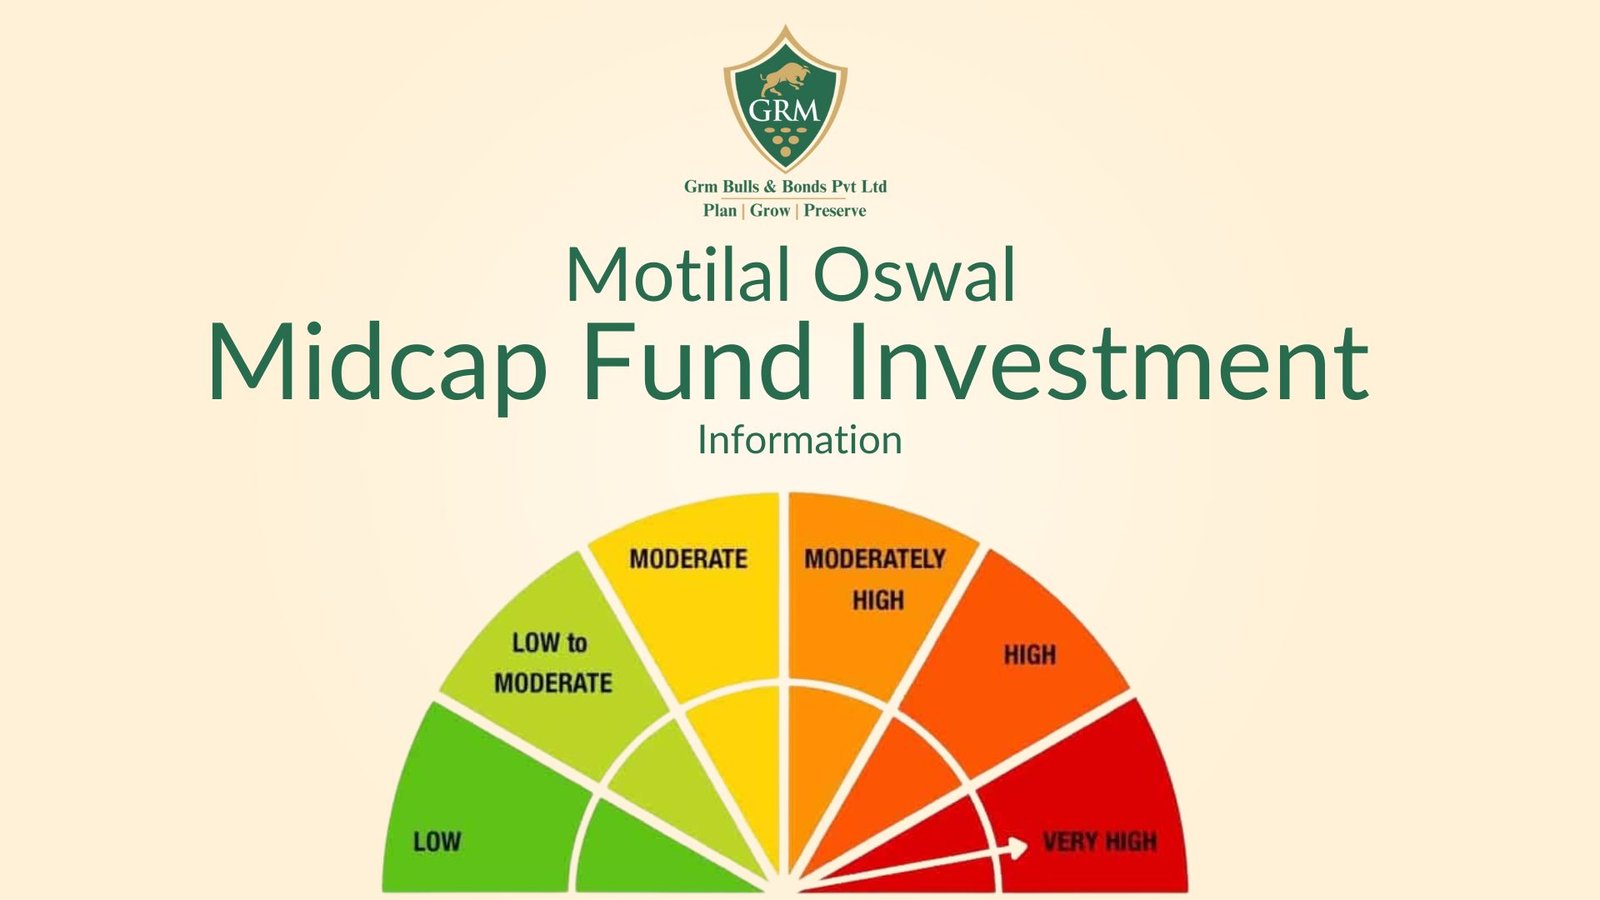 Motilal Oswal Midcap Fund Investment Information